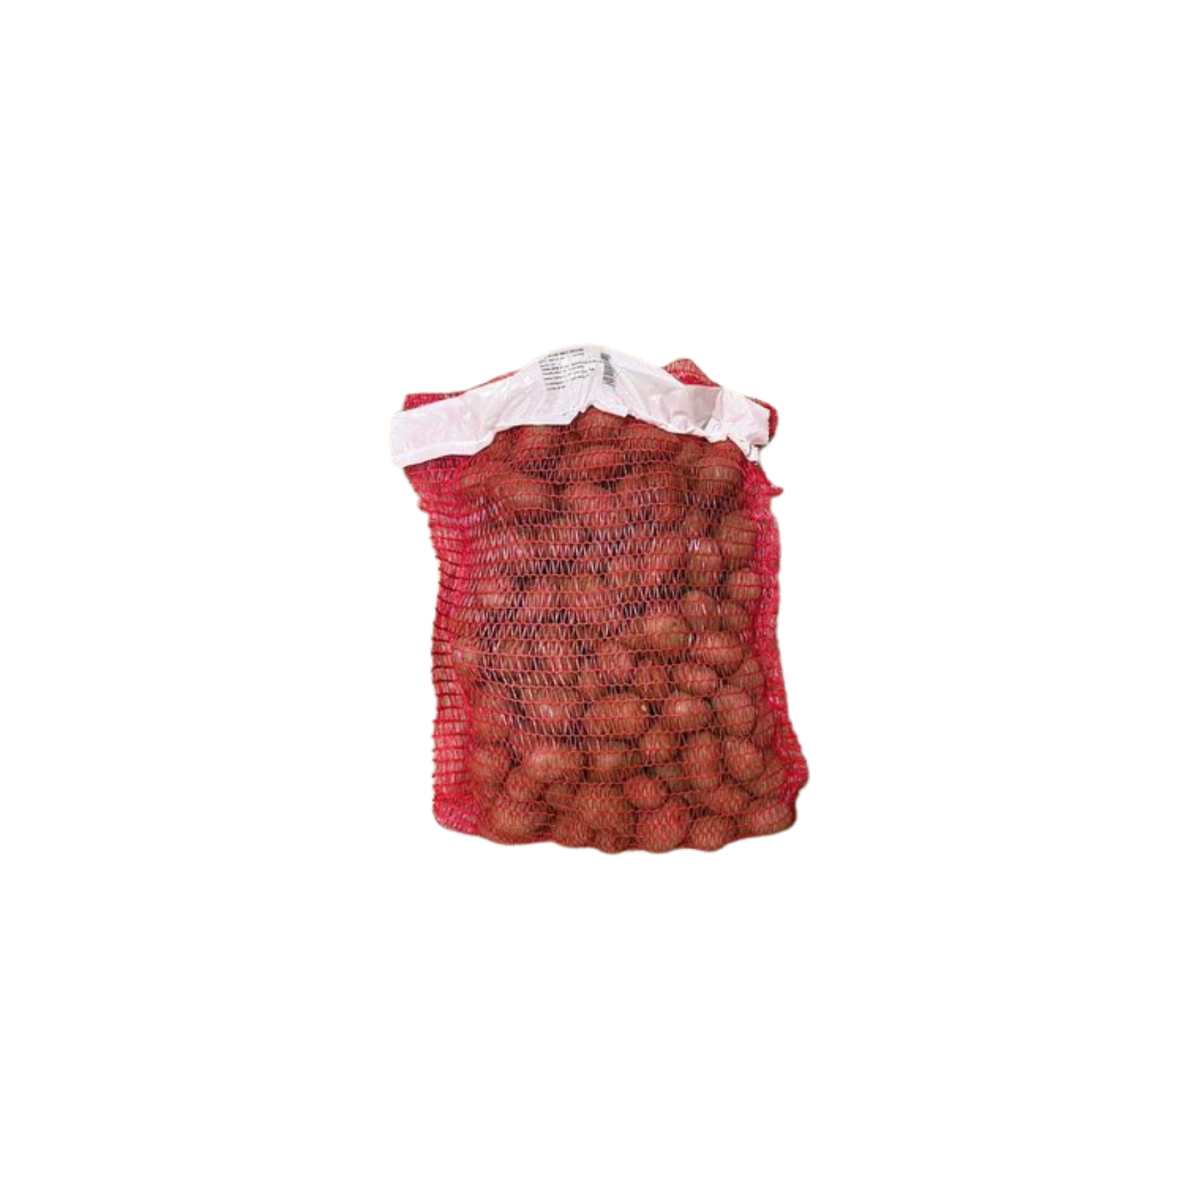 Sadbové brambory Rosara - Solanum tuberosum - červené velmi rané - 5 kg